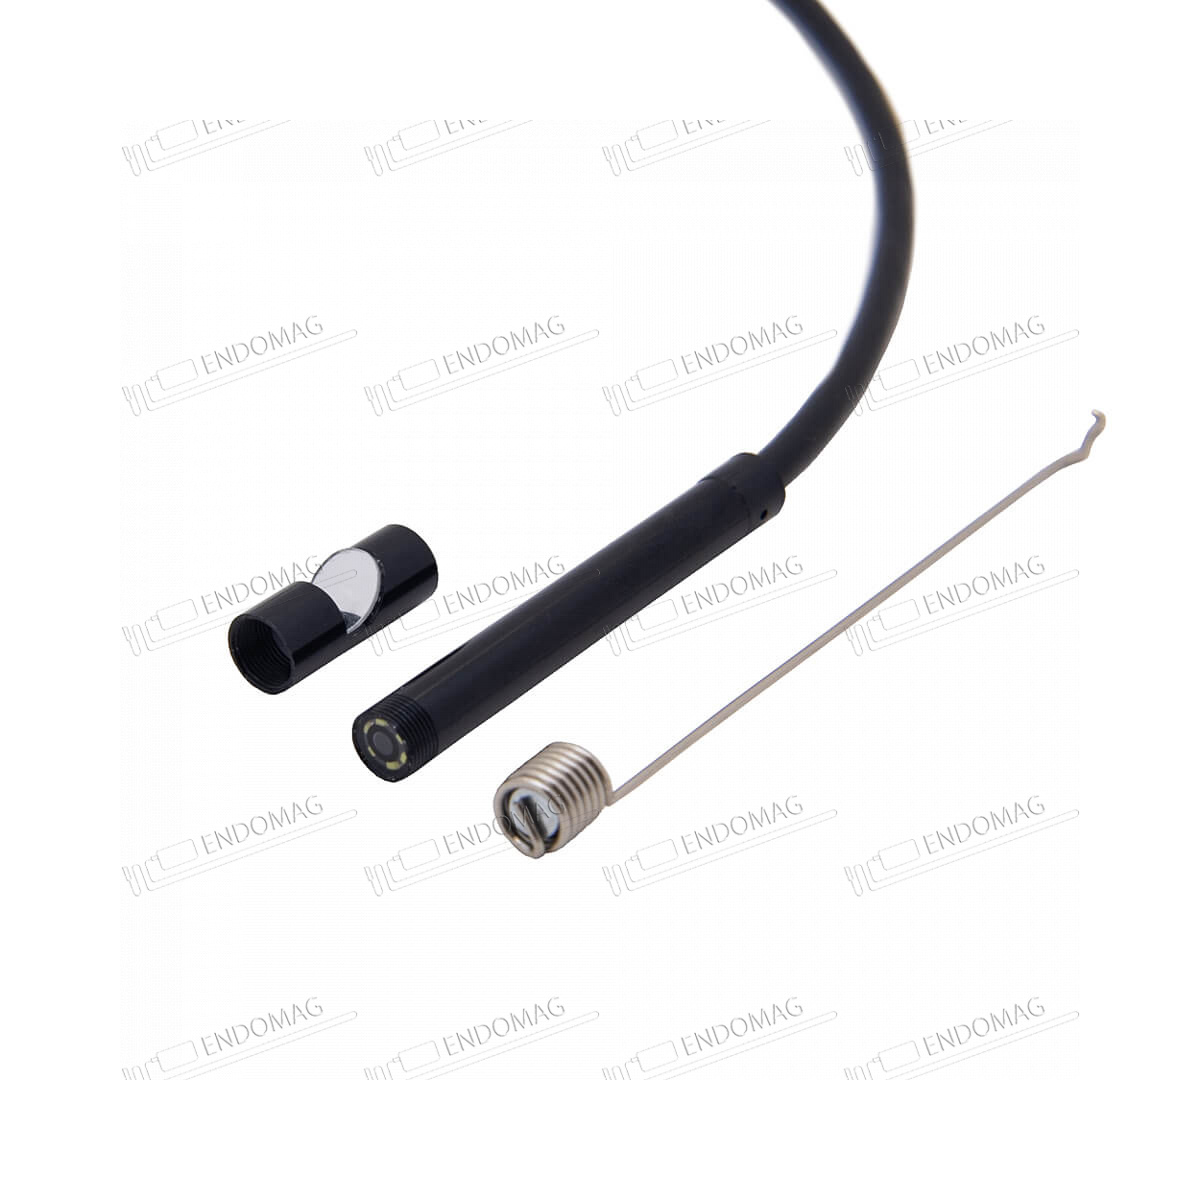 Технический USB эндоскоп с поддержкой Android (5.5 мм., 3.5 метра) - 2